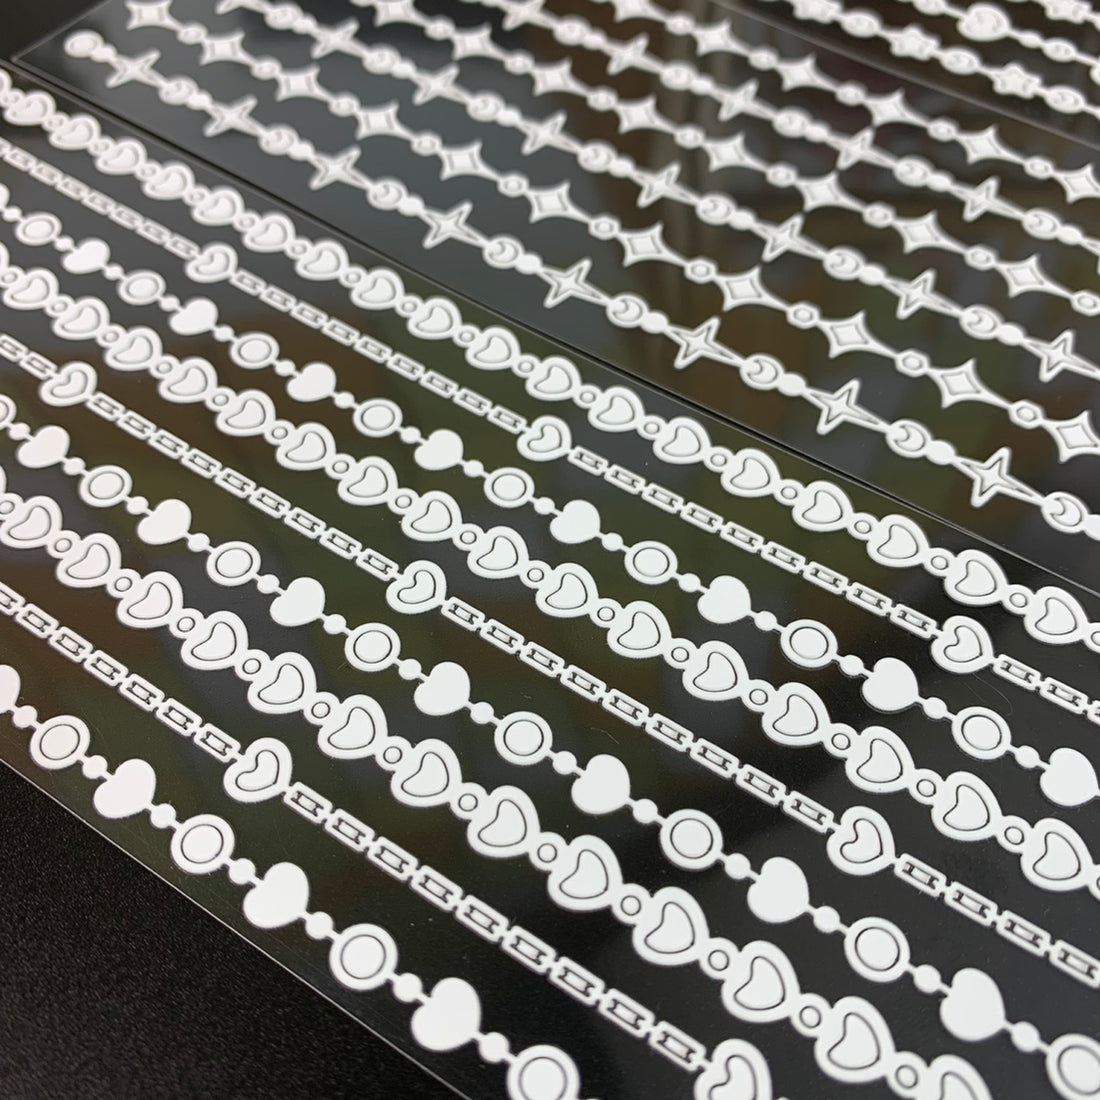 Unique Chain Sticker Sheet